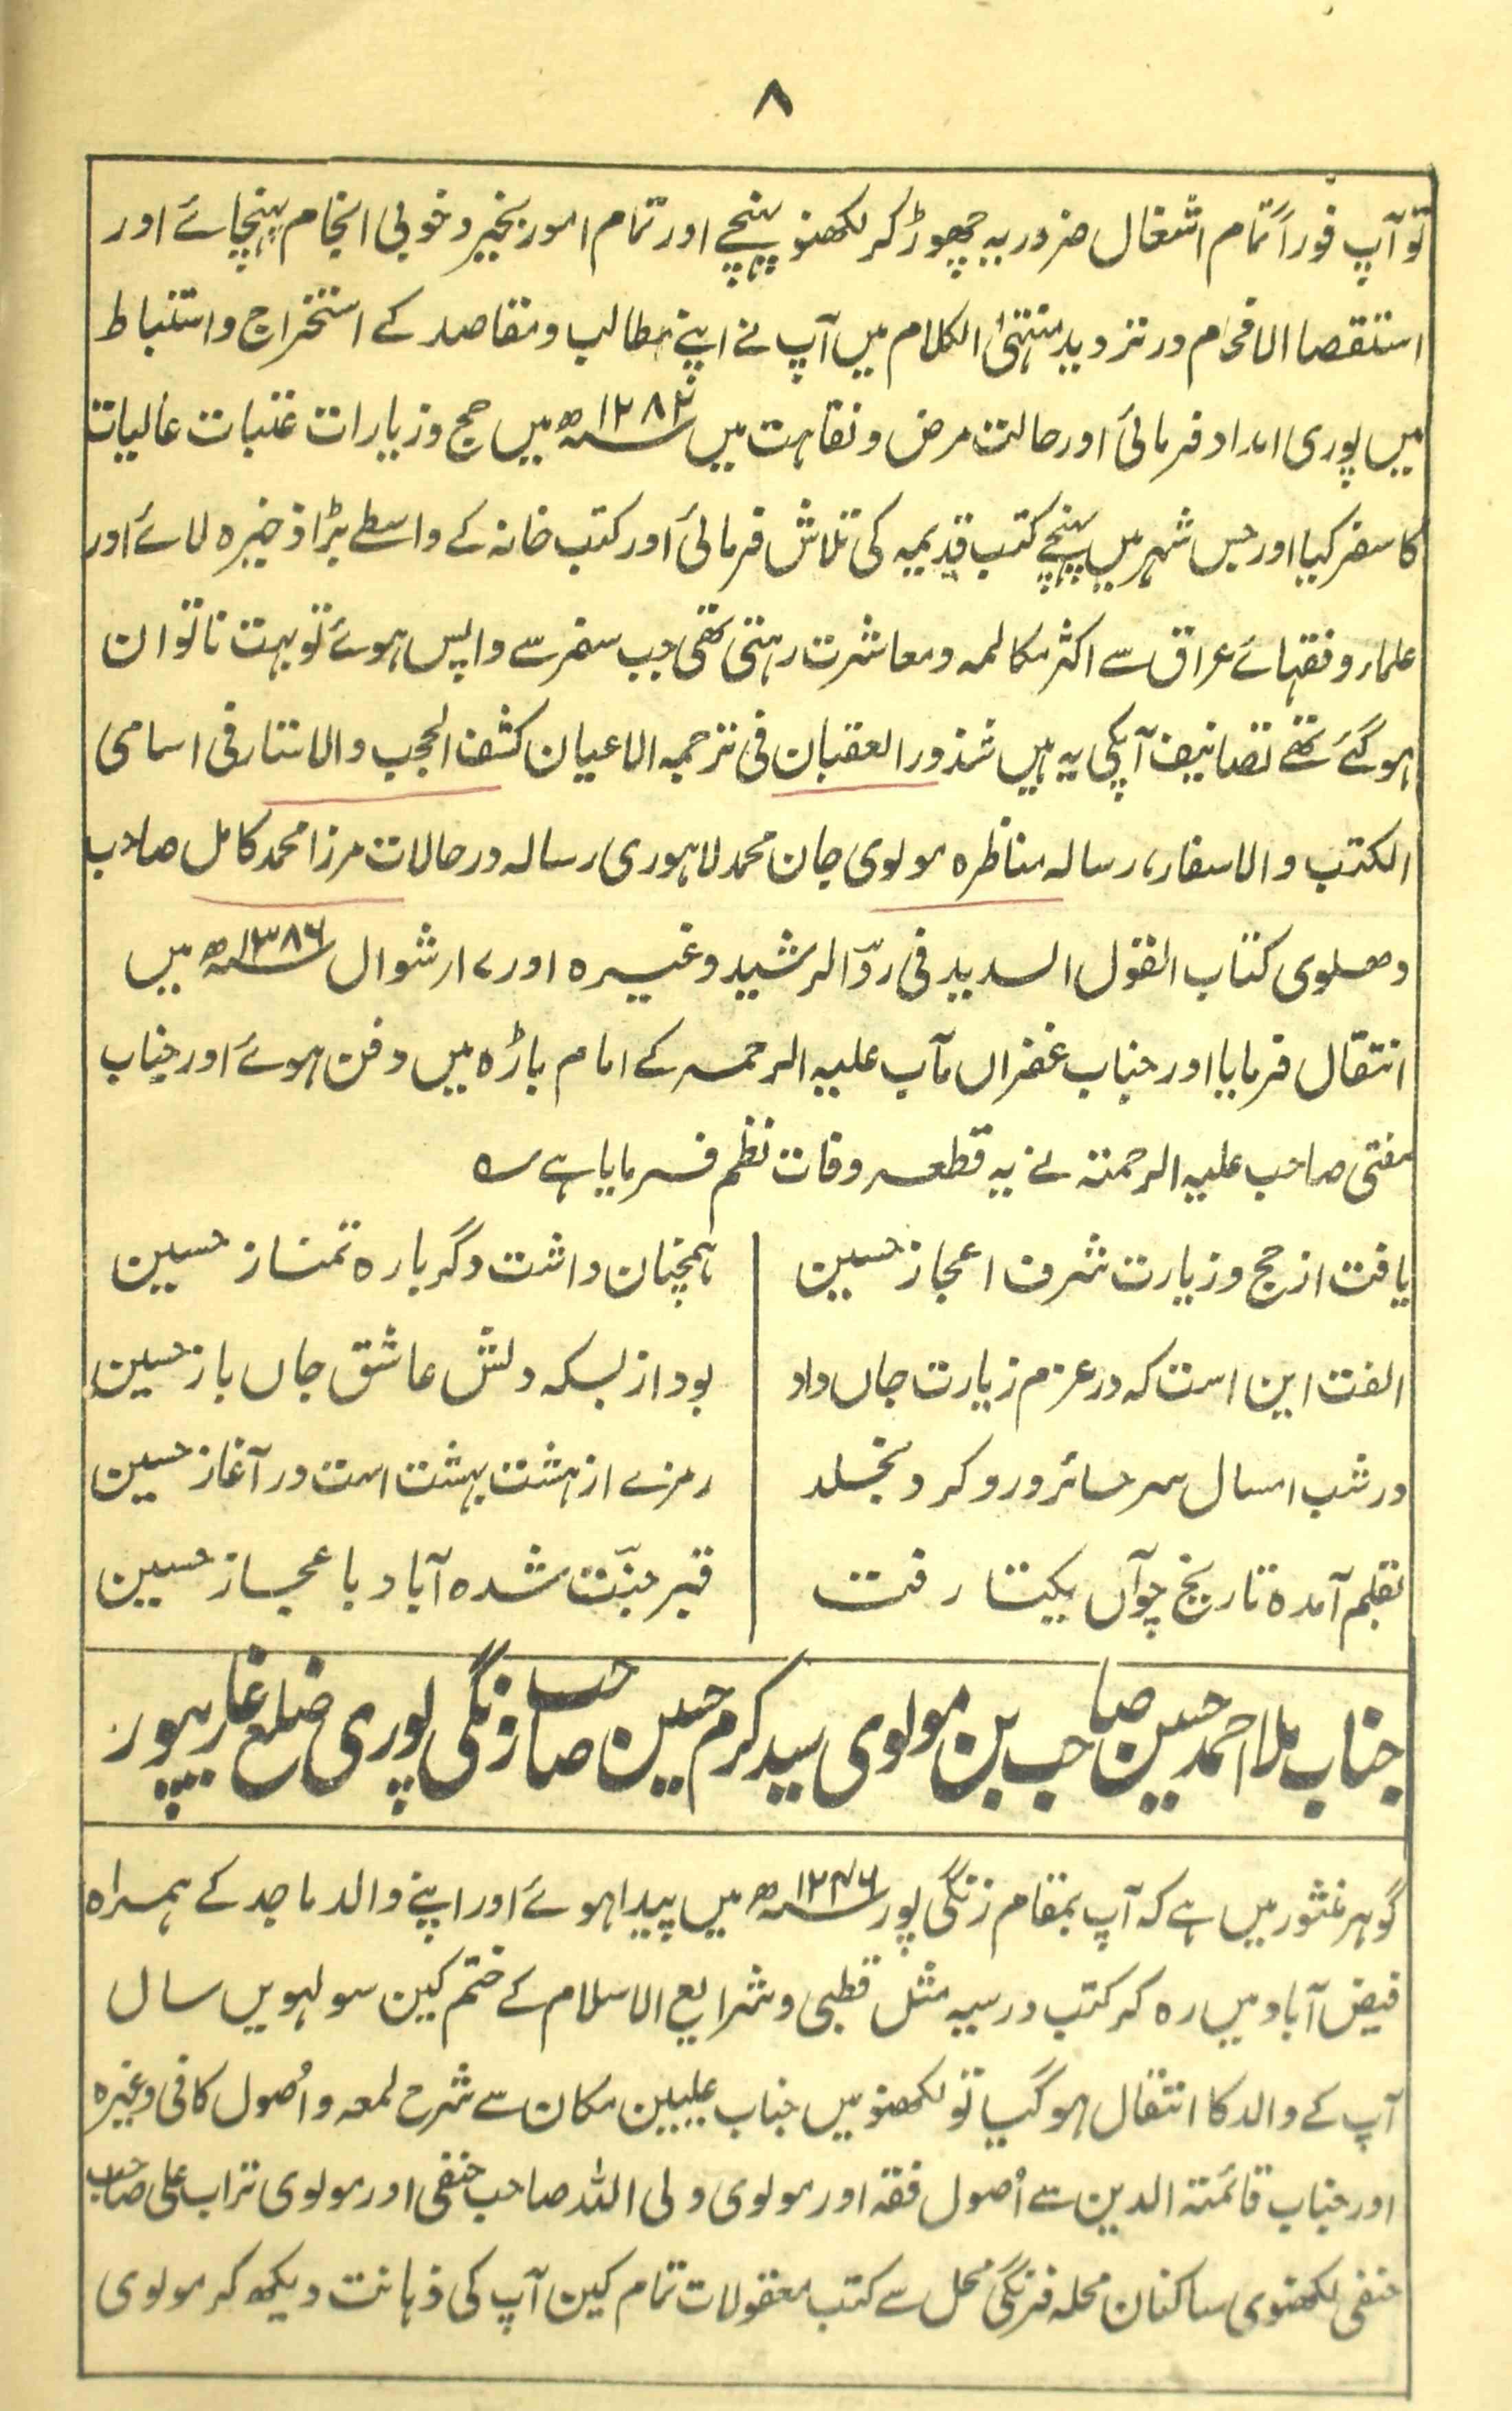 Tazkira-e-Bebaha Fi Tareekhil-Ulama